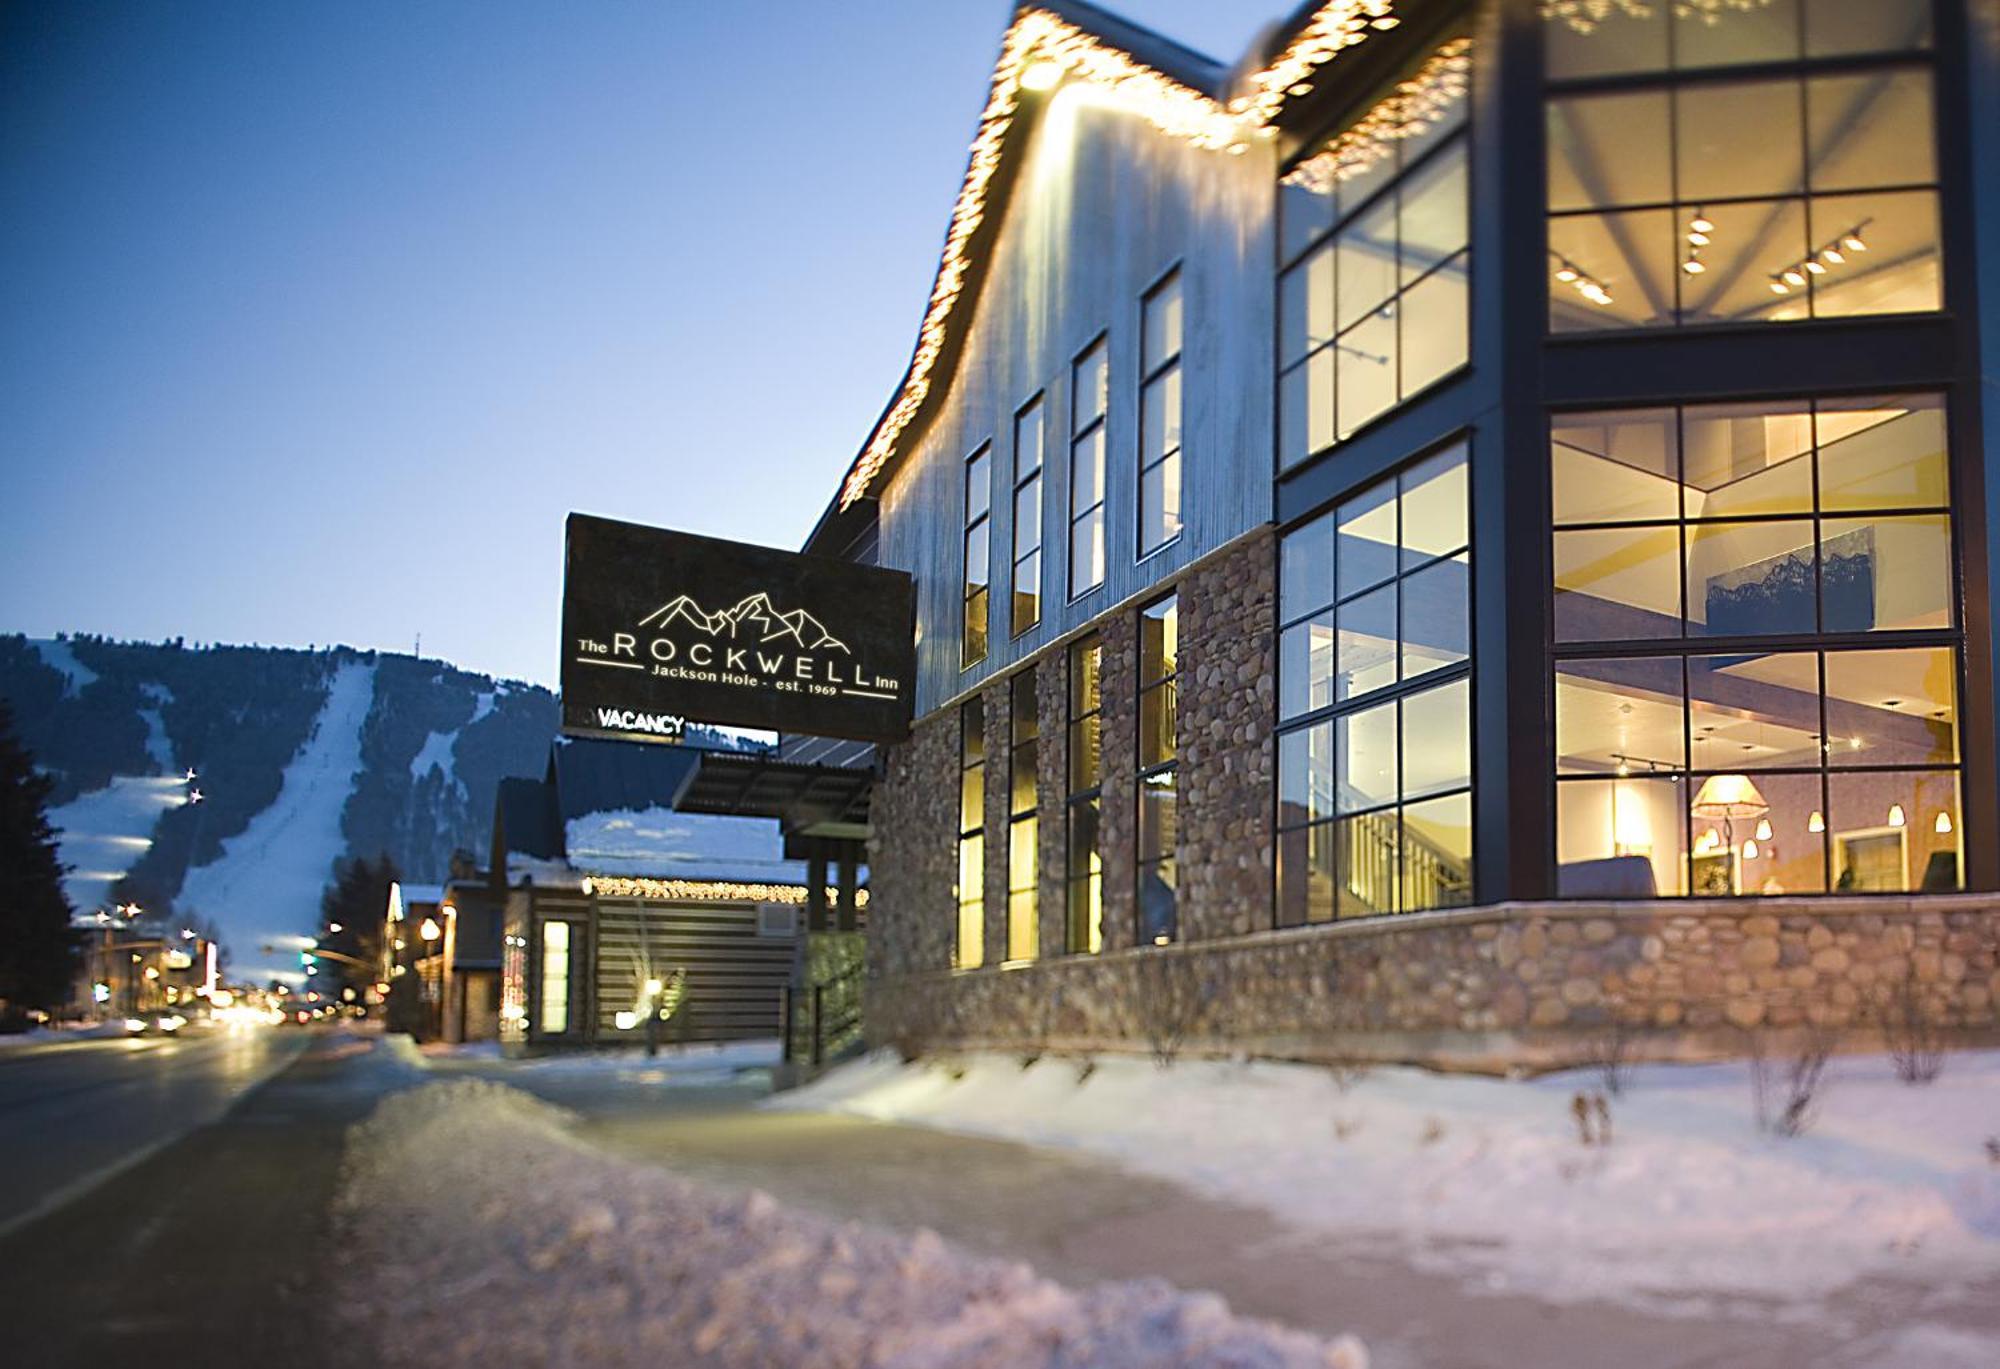 The Lexington At Jackson Hole Hotel Exterior photo